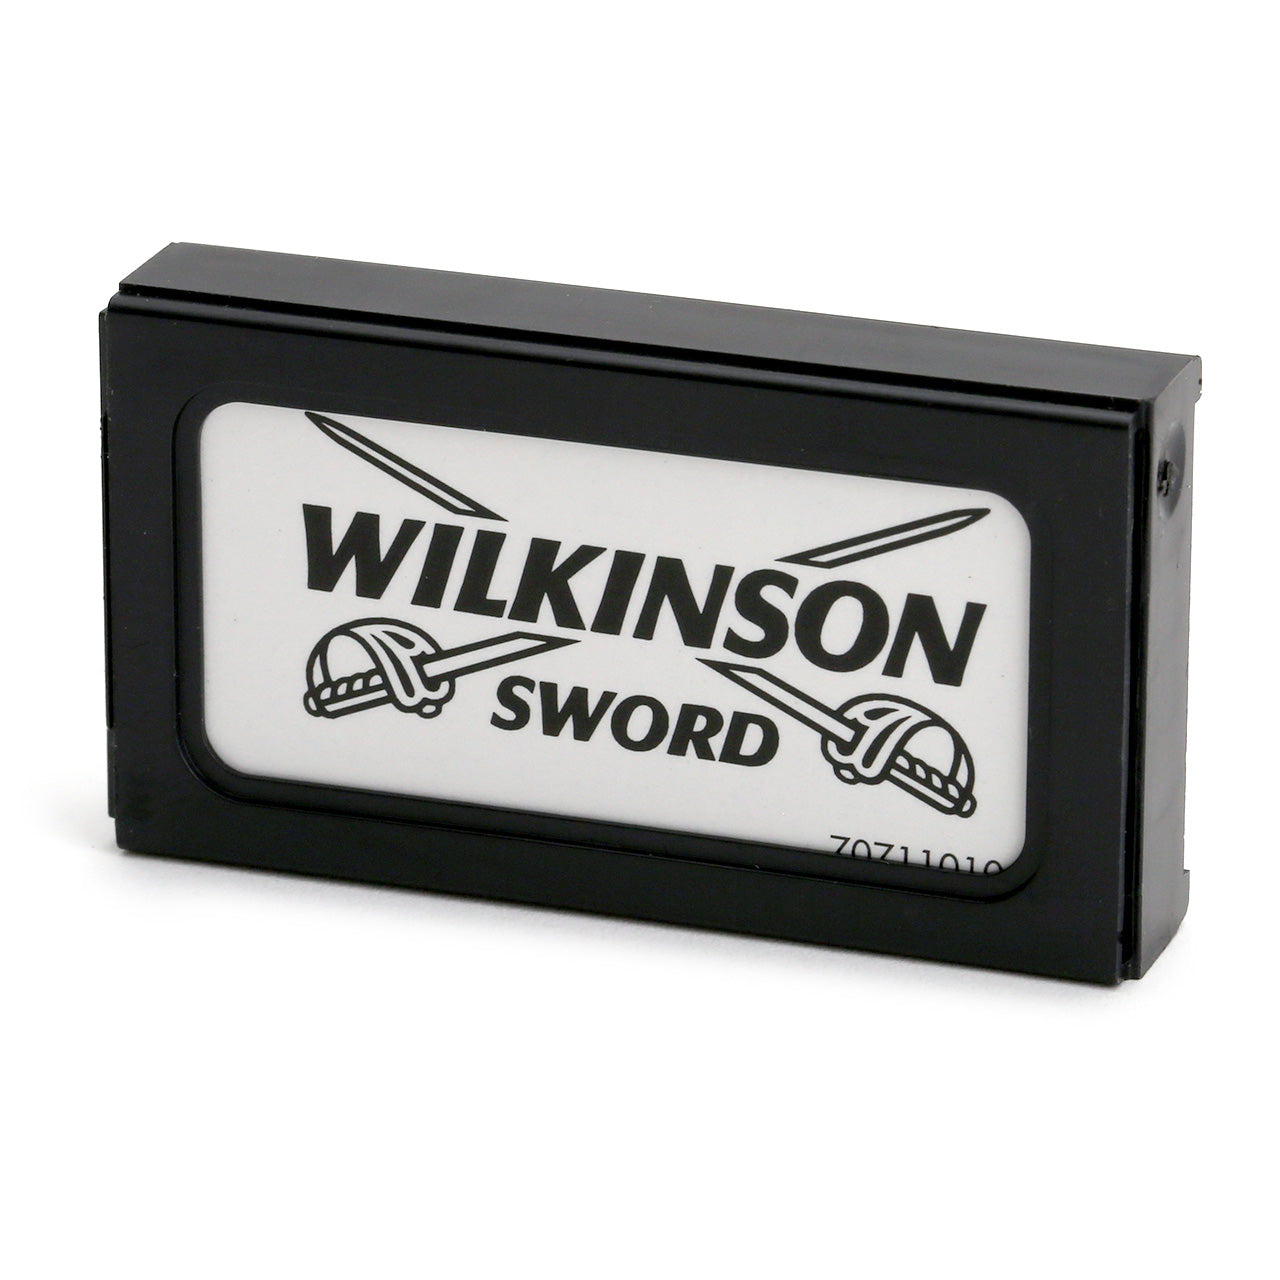 Wilkinson Sword pack of 100 blades - 20 tucks each with 5 blades